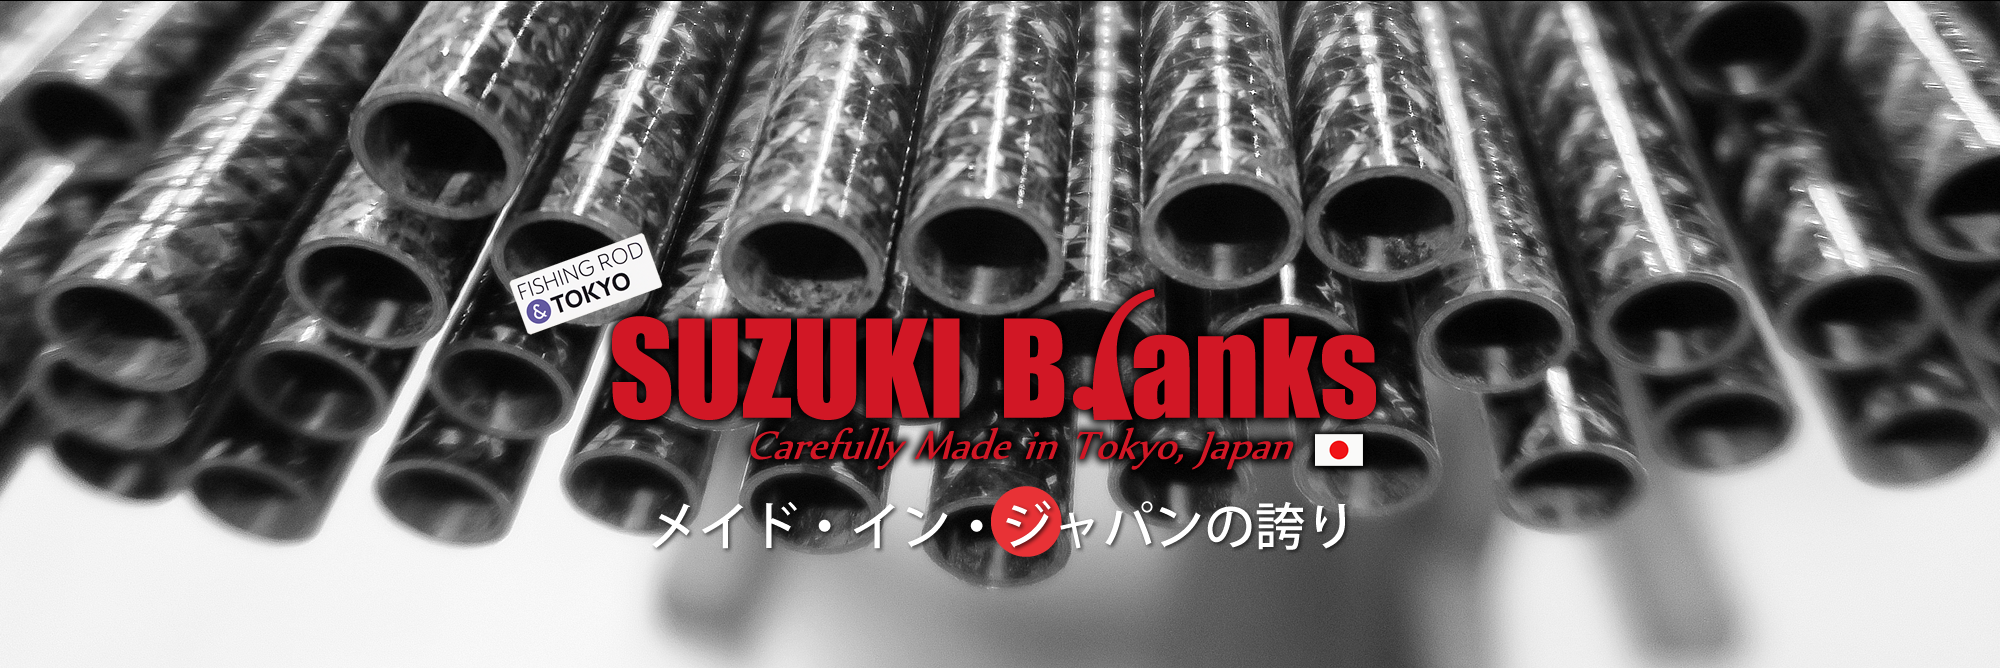 Proud of Made in Japan SUZUKI Blanks